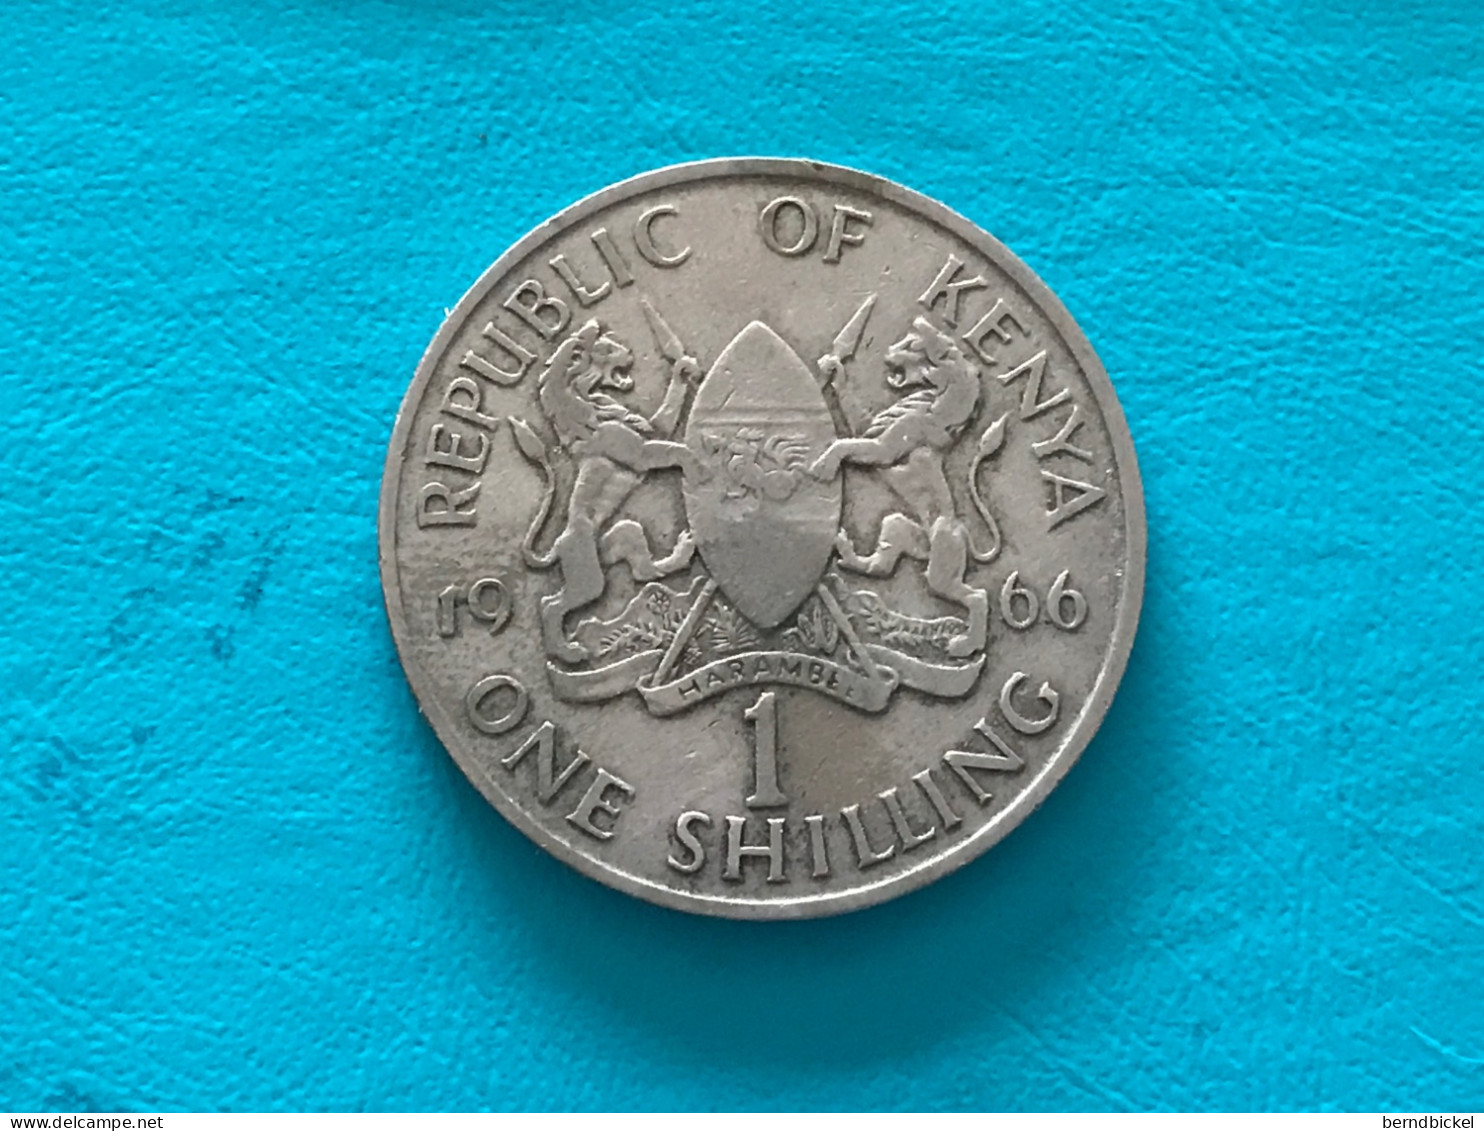 Münze Münzen Umlaufmünze Kenia 1 Shilling 1966 - Kenia